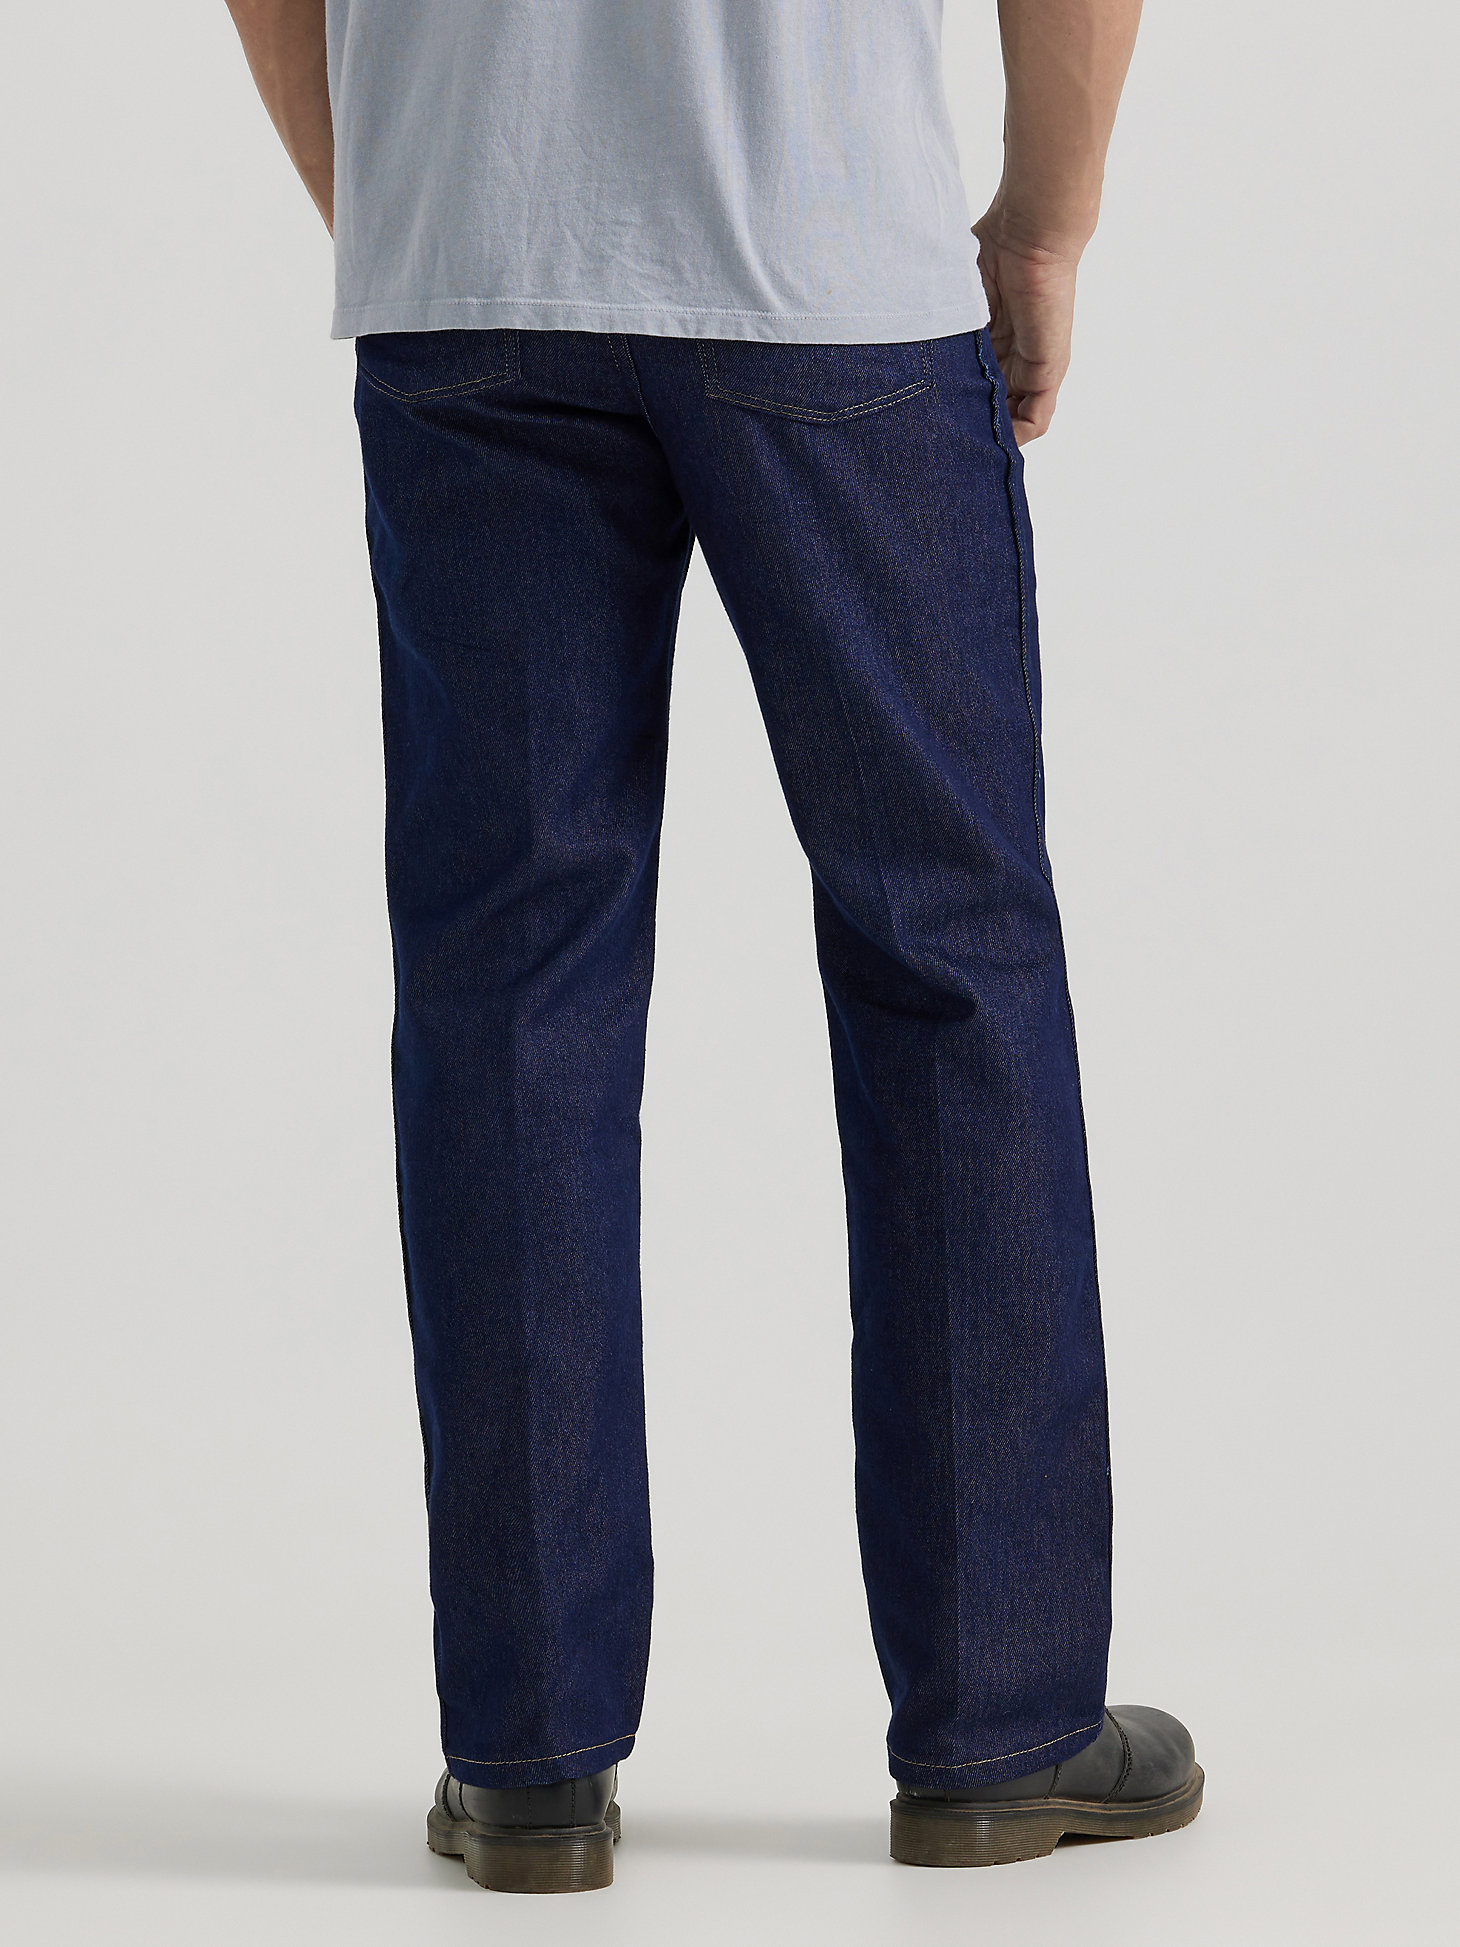 Wrangler® Men's Five Star Premium Regular Flex Fit Jean in Dark Indigo alternative view 1